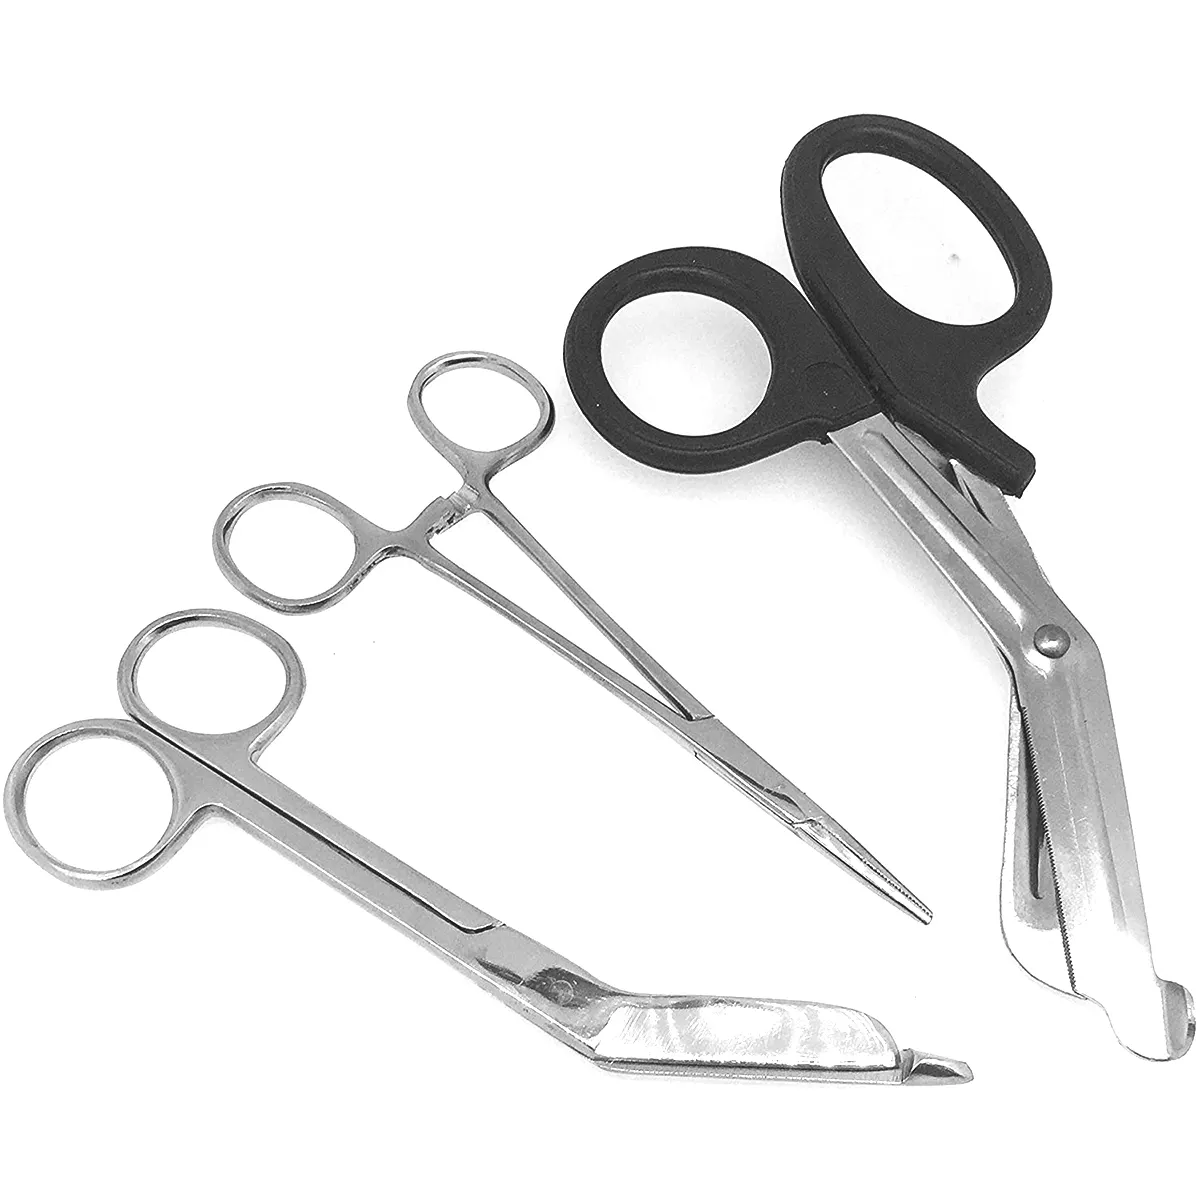 Paramedic tools with medical bandage scissors lister scissors, and a hemostat clamp for paramedics, EMTs, Nurses